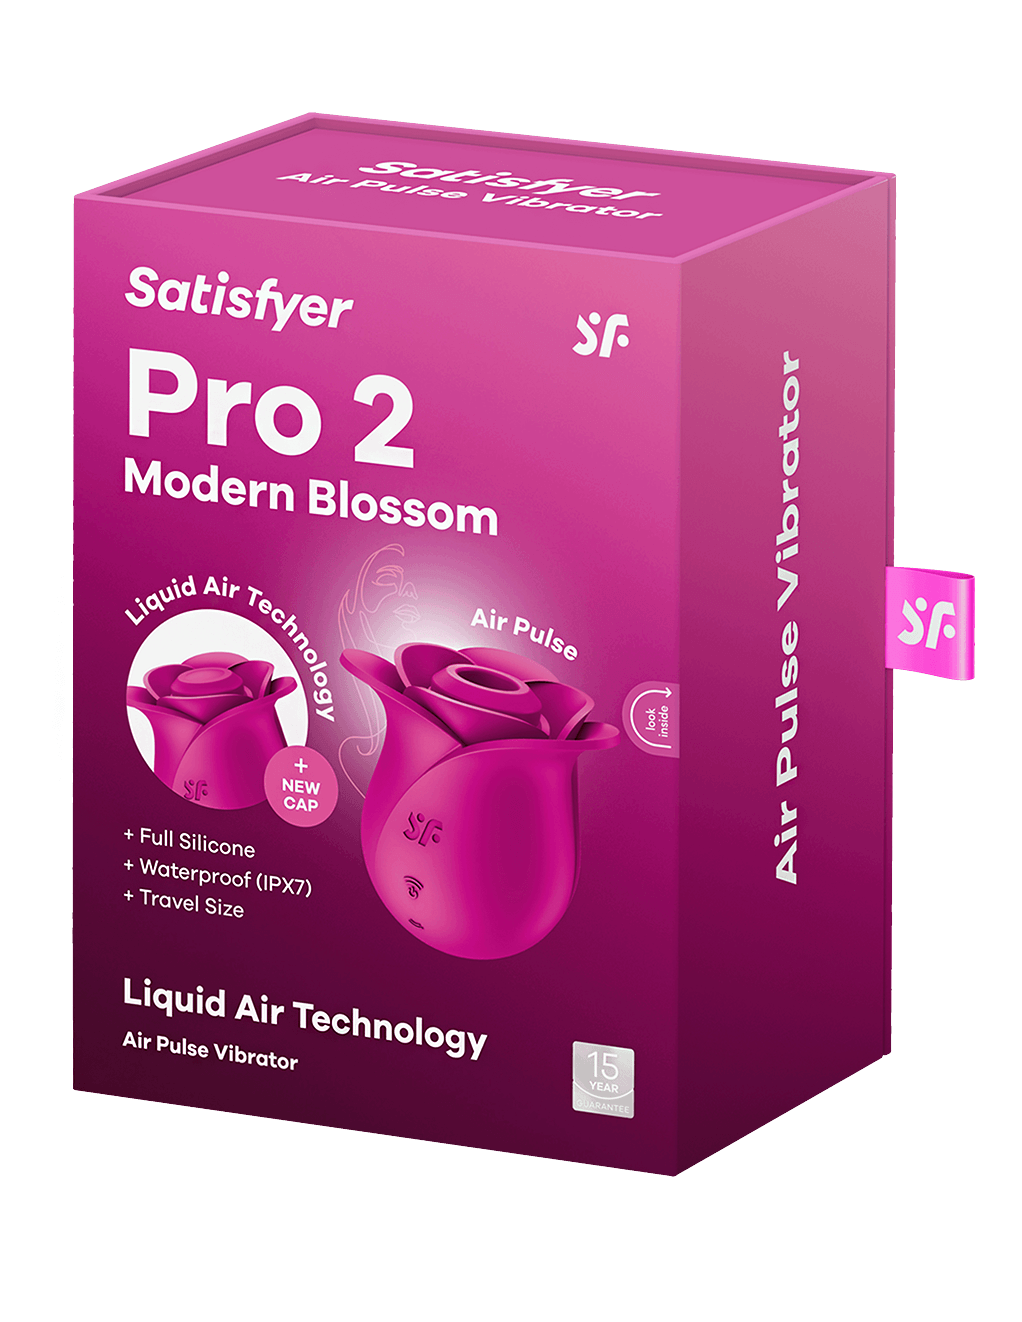 Satisfyer Pro 2 Modern Blossom - Pink - Box